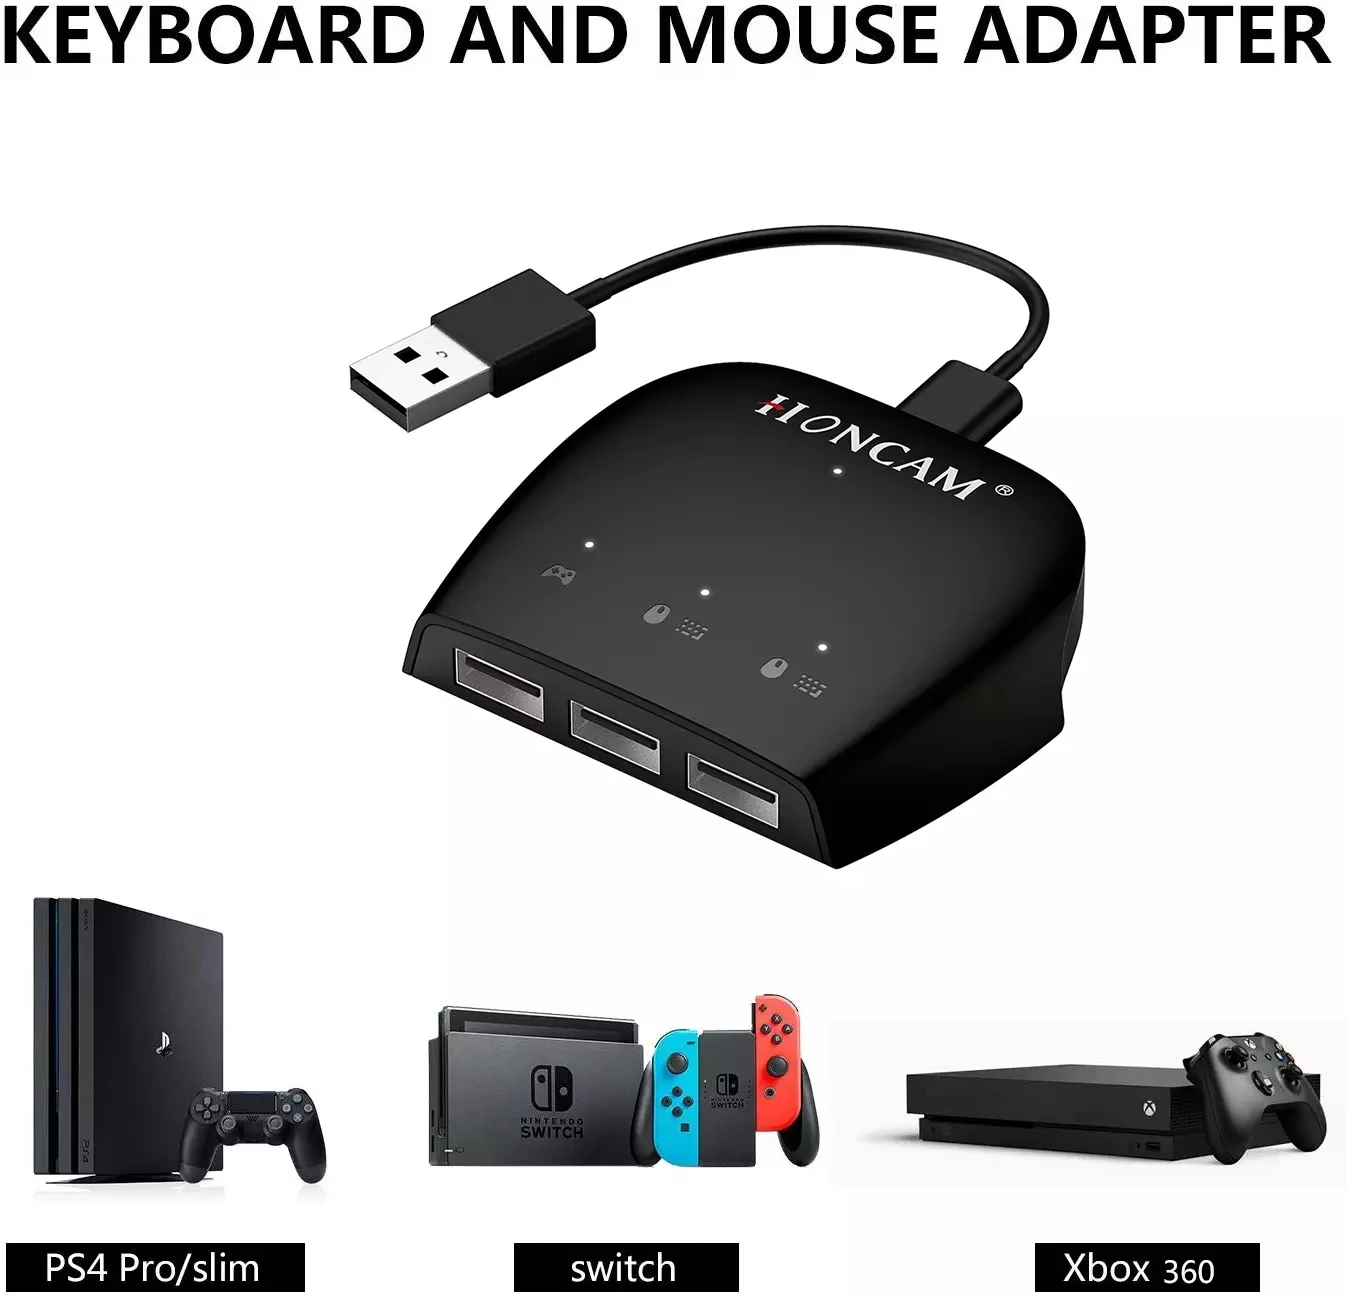 Ps4 клавиатура и мышь как подключить. Keyboard and Mouse Adapter для ps4. Адаптер для Нинтендо свитч для клавиатуры и мыши. Адаптер для хбокс 360 для клавиатуры. Адаптер пс4 для клавиатуры и мыши.